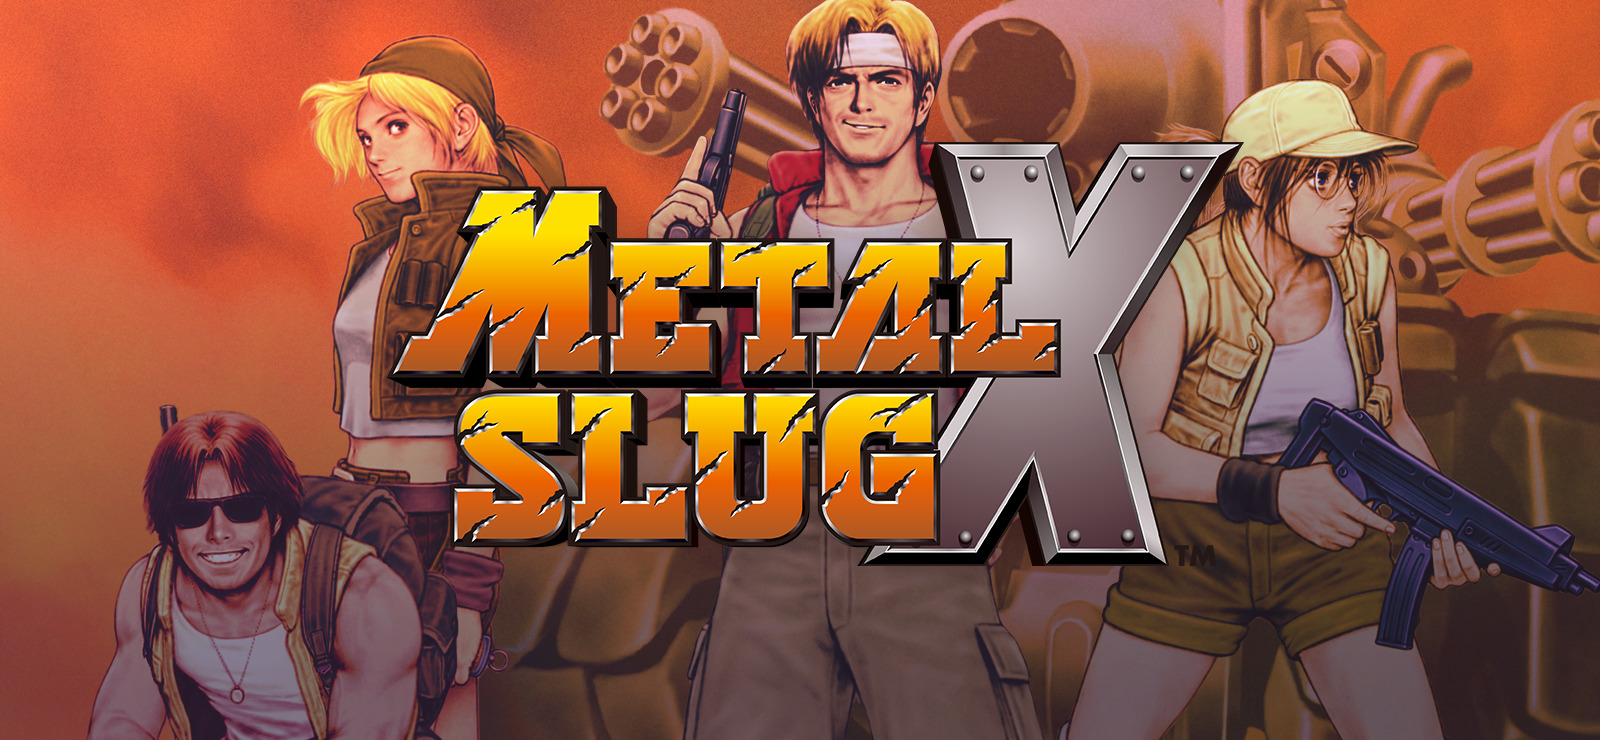 metal slug emulator without lag